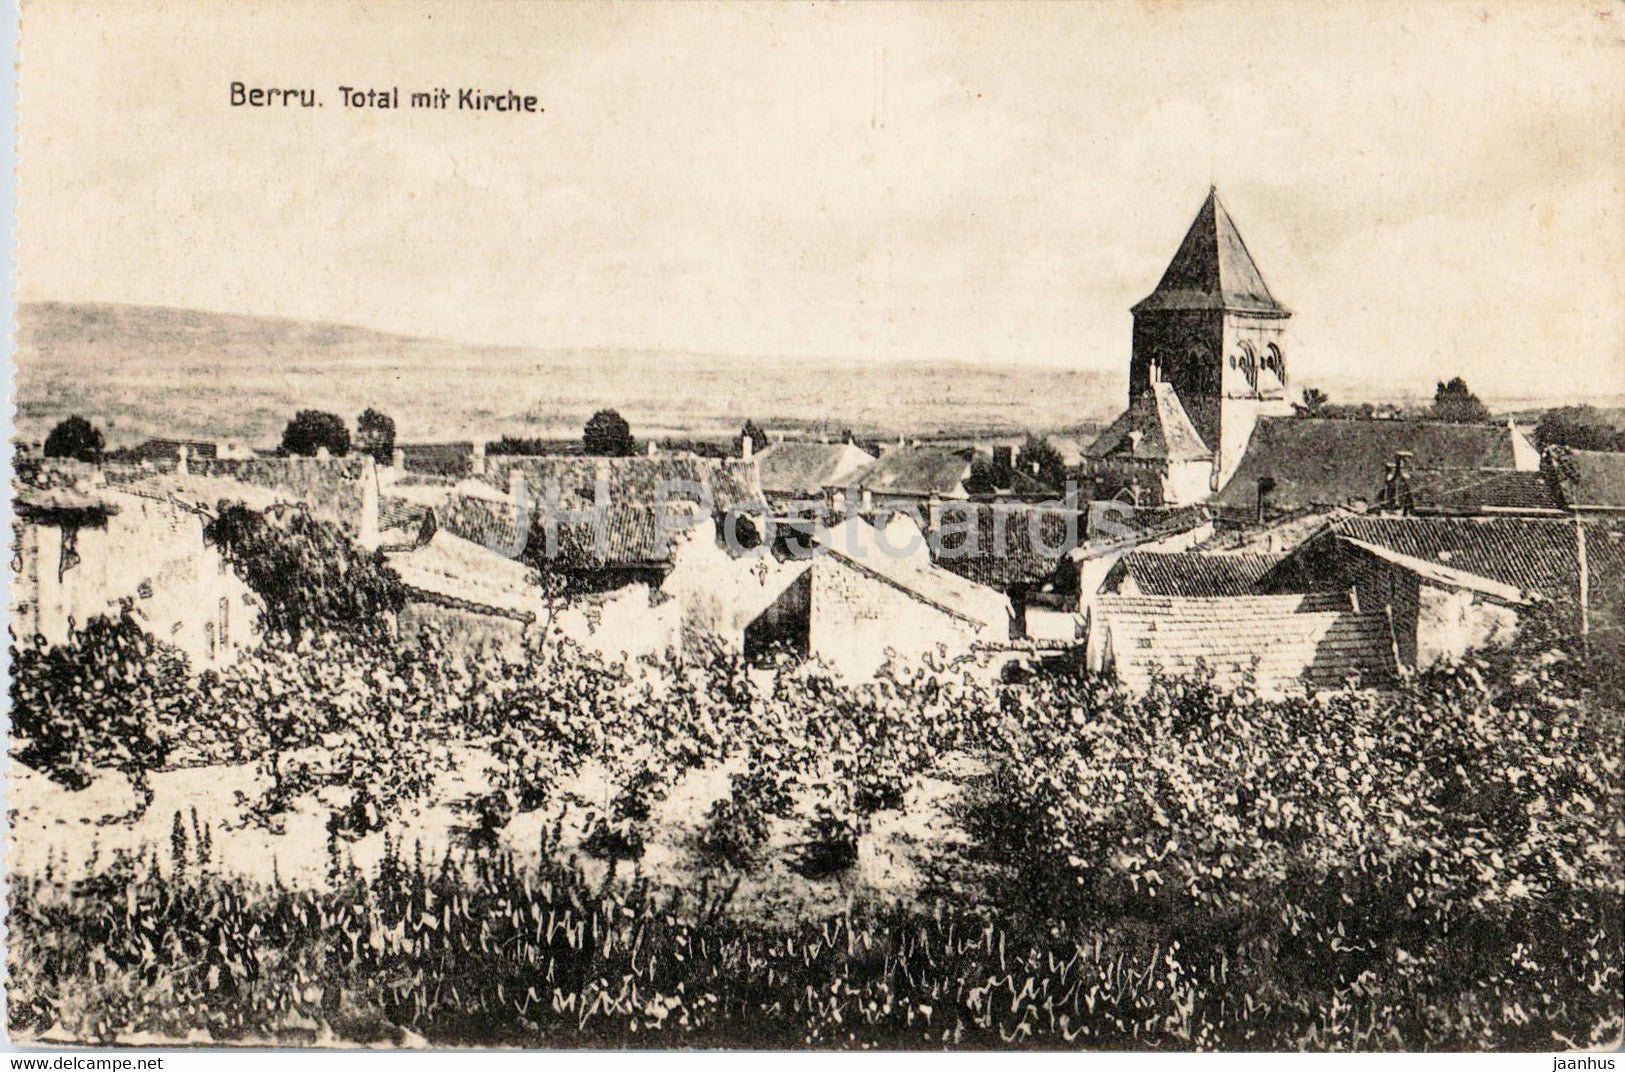 Berru - Total mit Kirche - church - 827 - old postcard - France - unused - JH Postcards